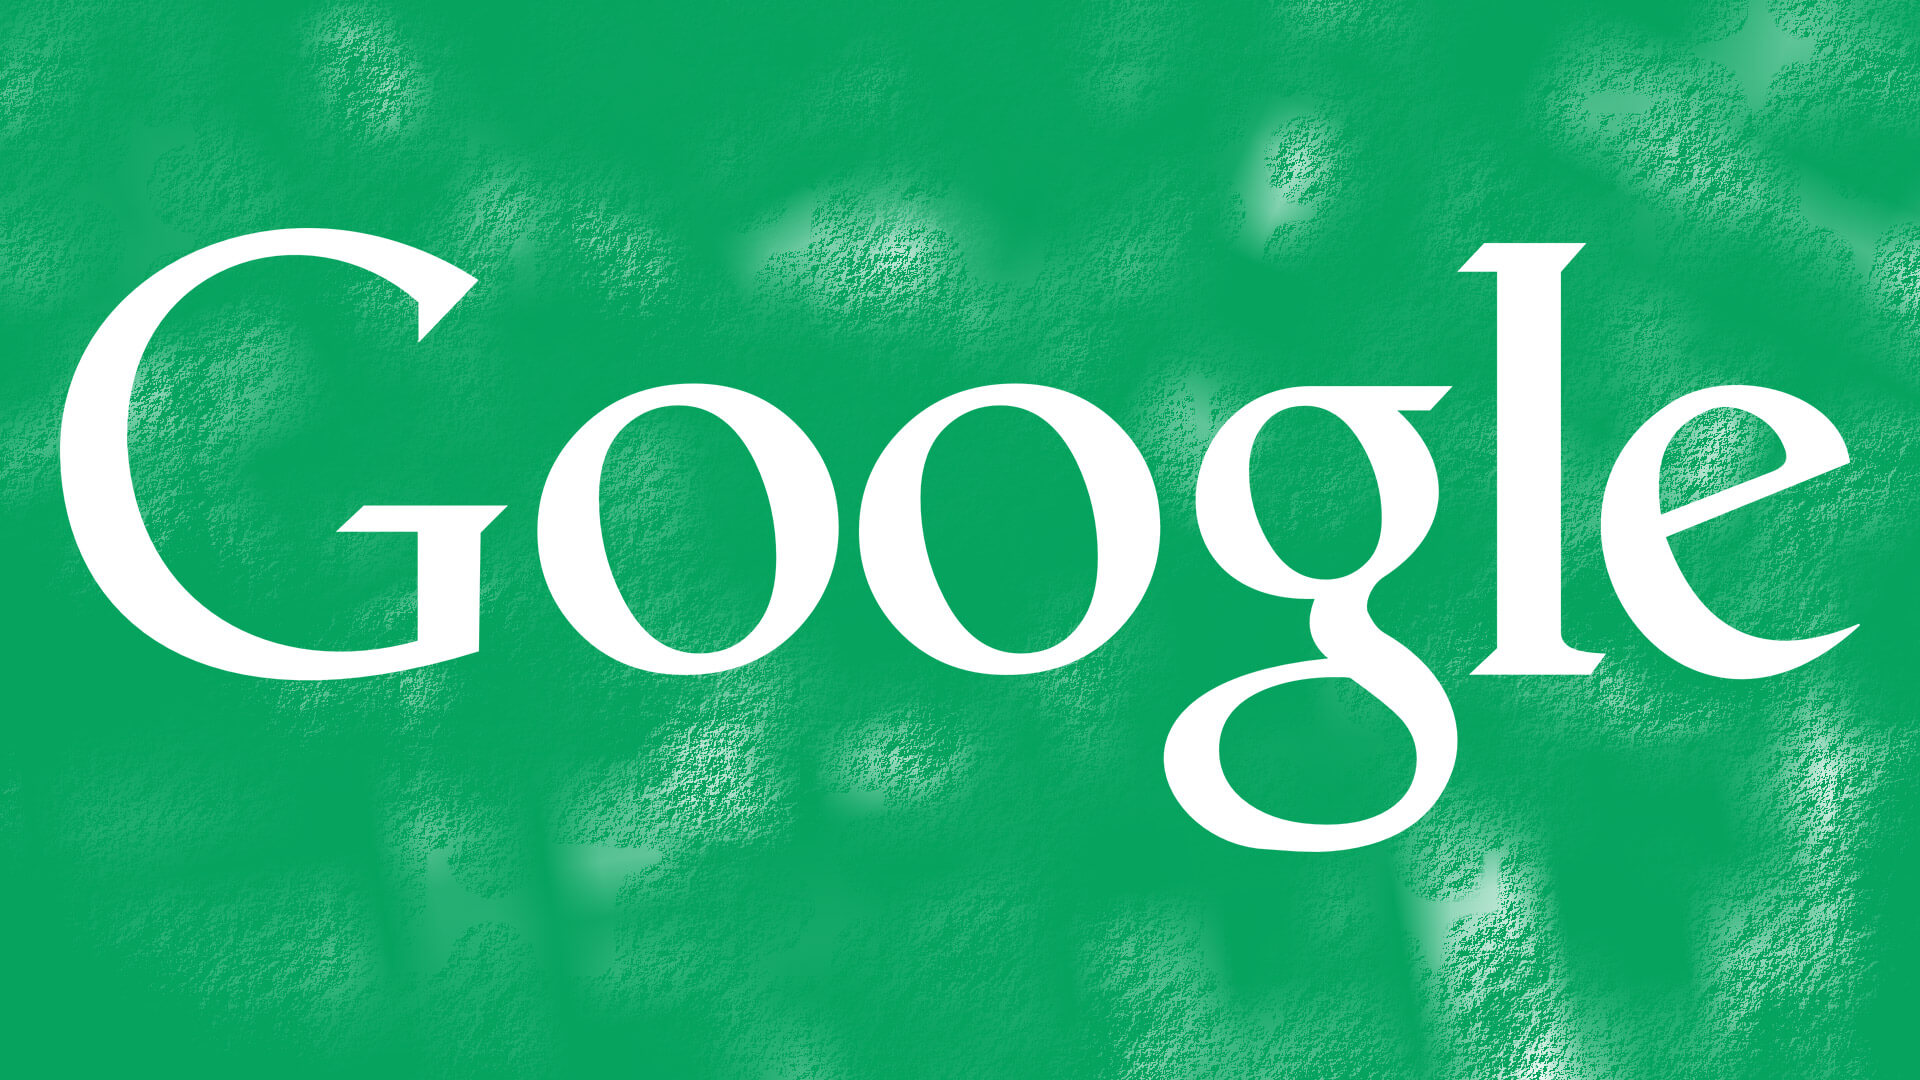 google-logo-green-1920